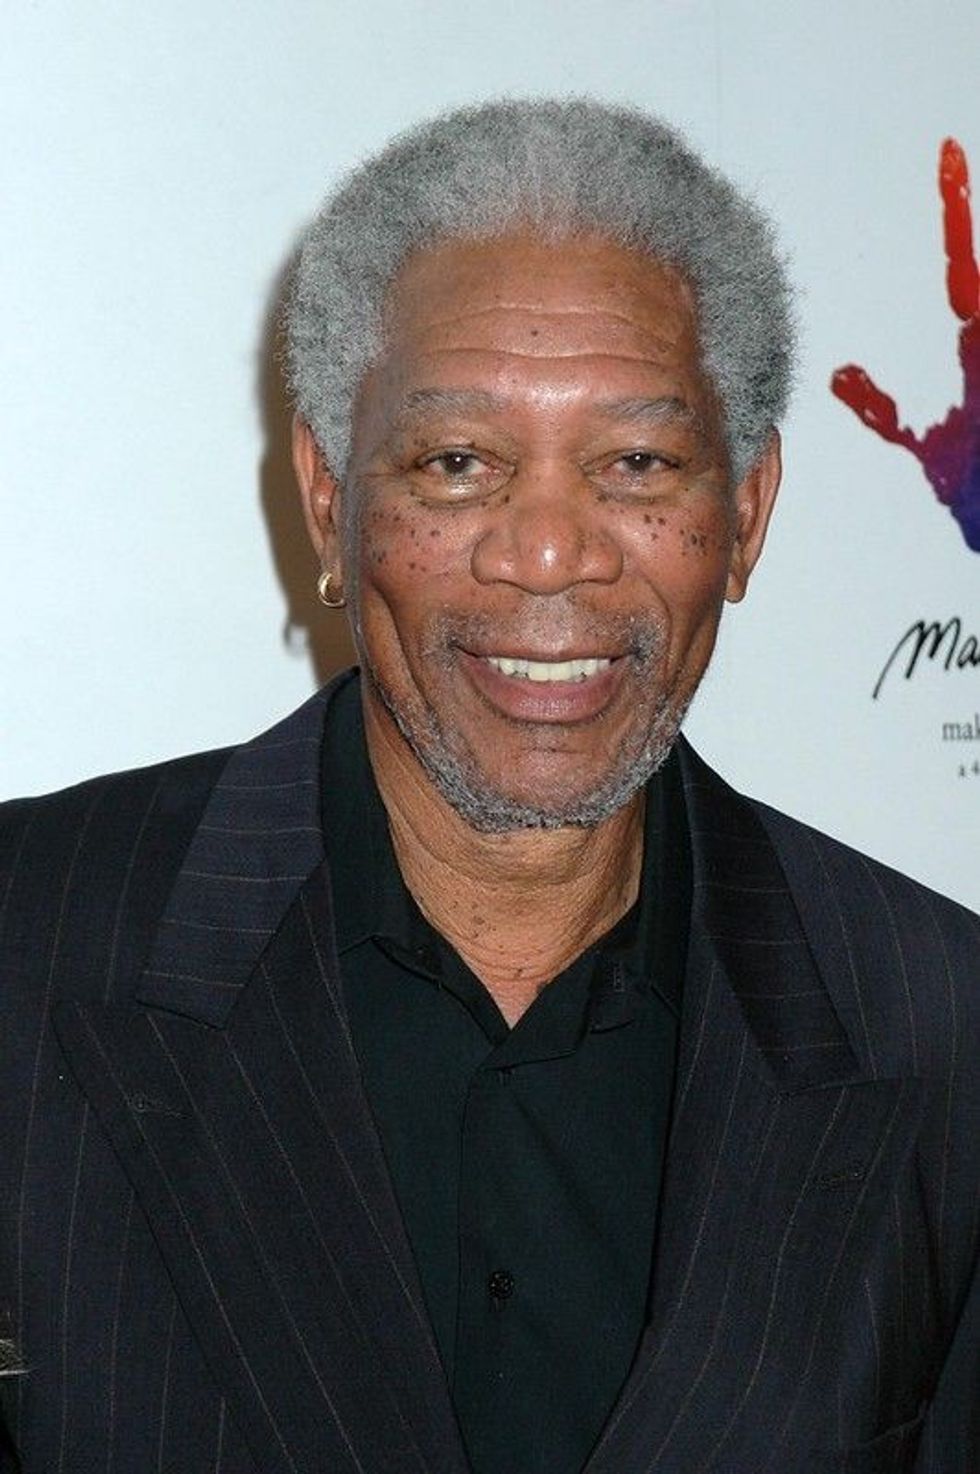 Morgan Freeman in black suit